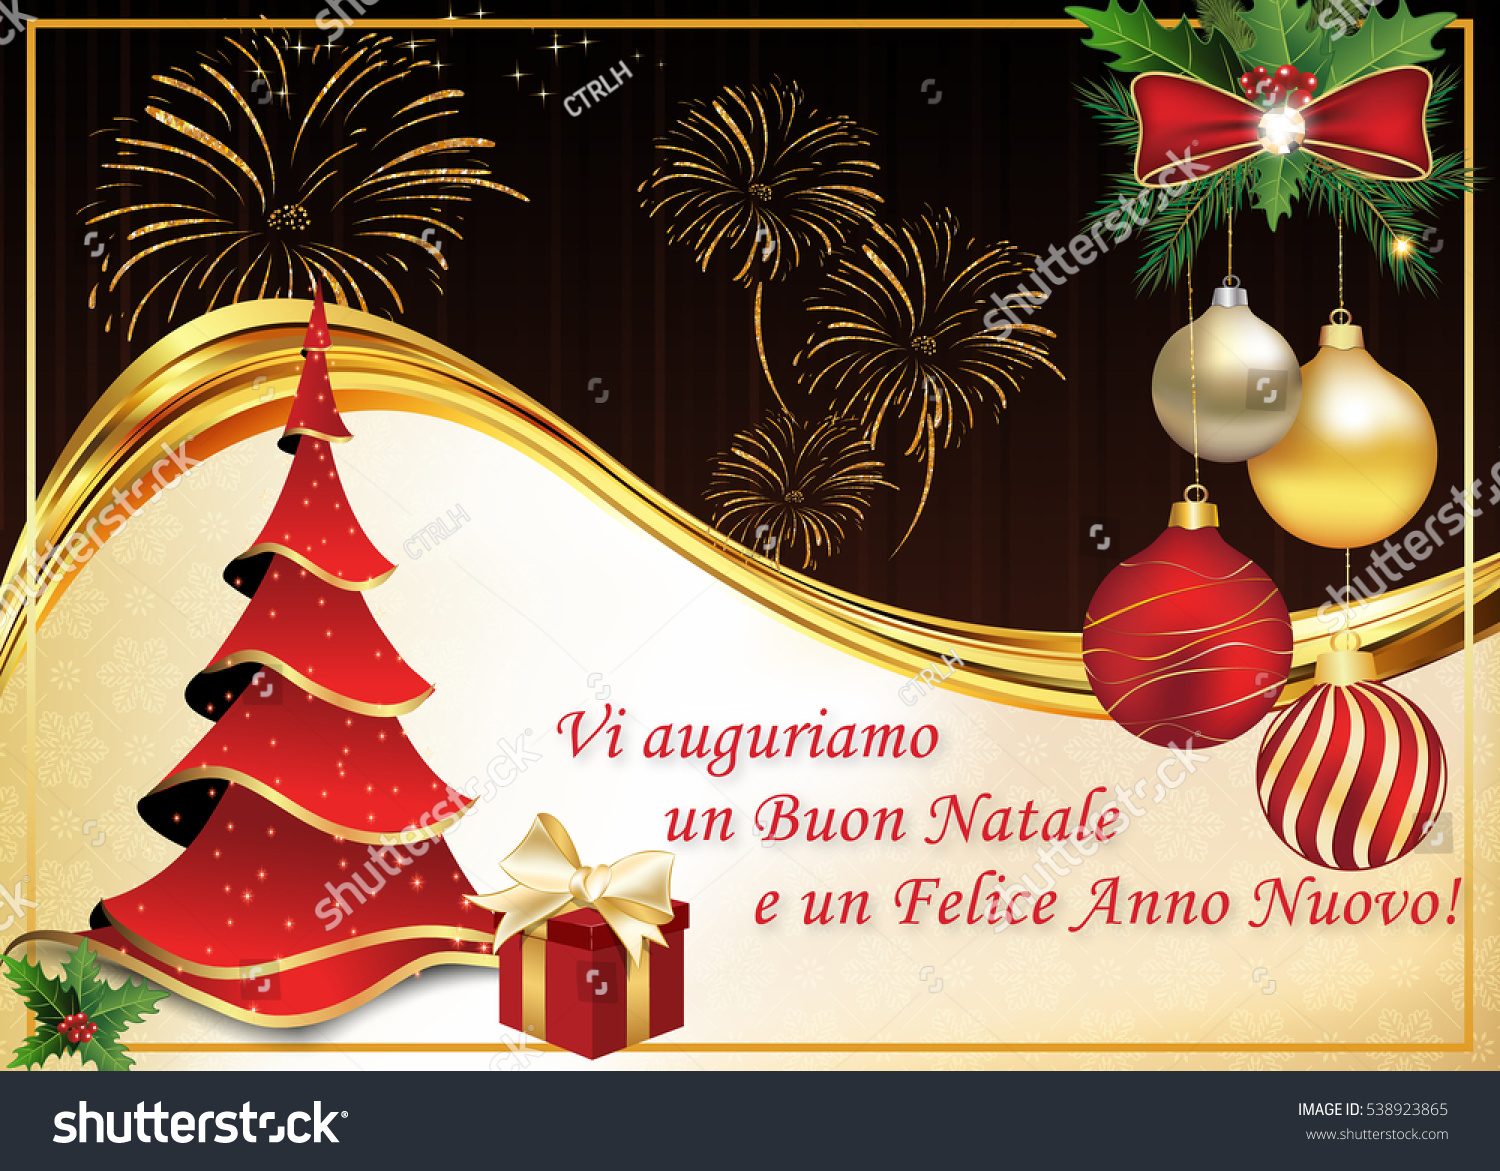 Buon Natale Wishes Italian.Italian Winter Holiday Greeting Card Merry Stock Illustration 538923865